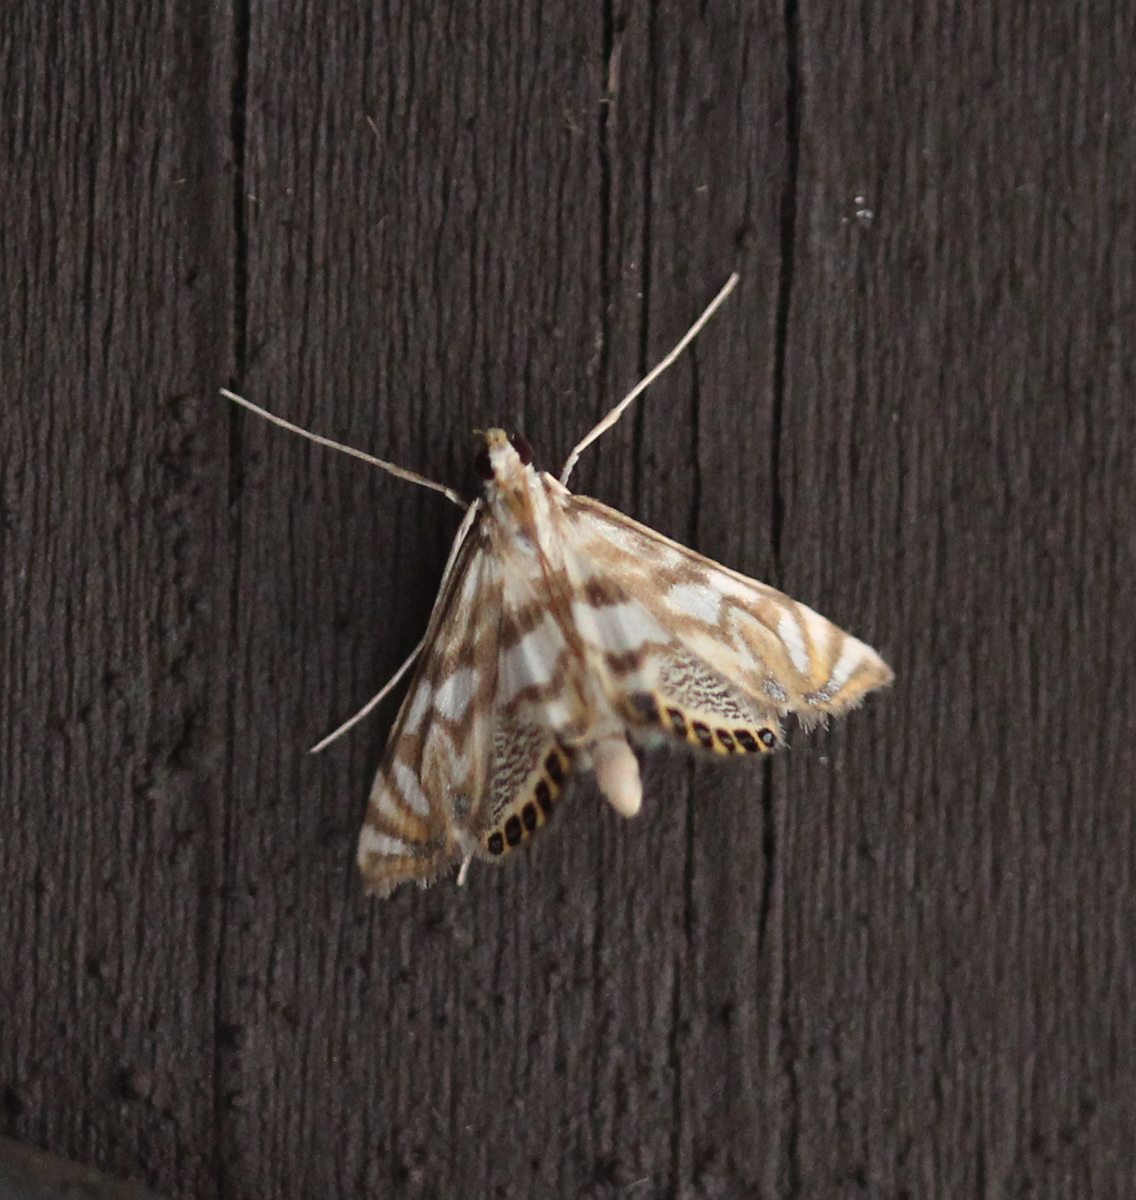 intricately patterned brown moth on dark wood